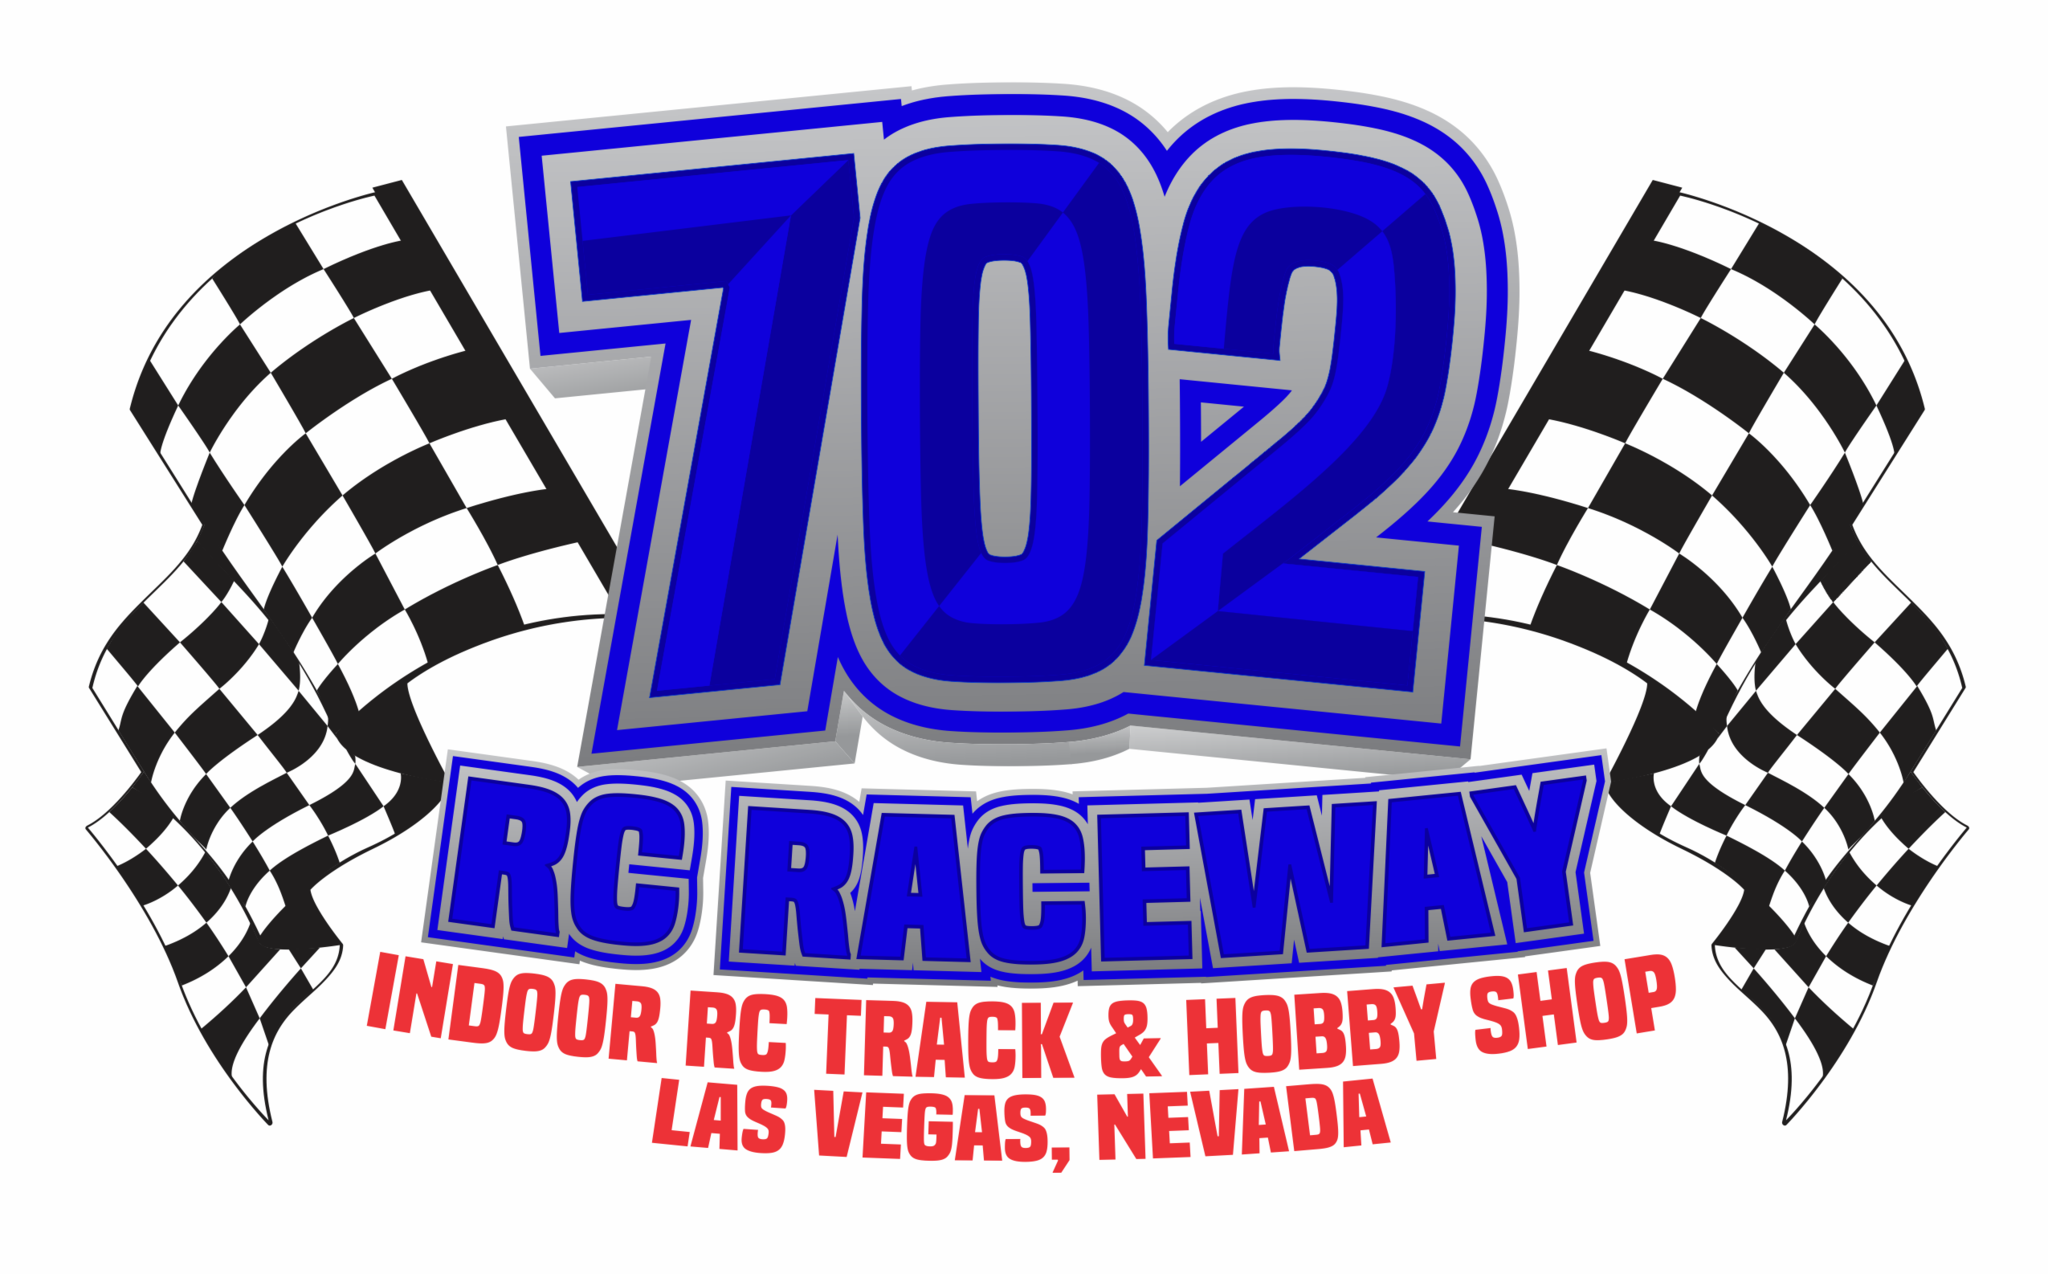 702 RC Raceway Track News: Week of Jun 15 - Jun 19